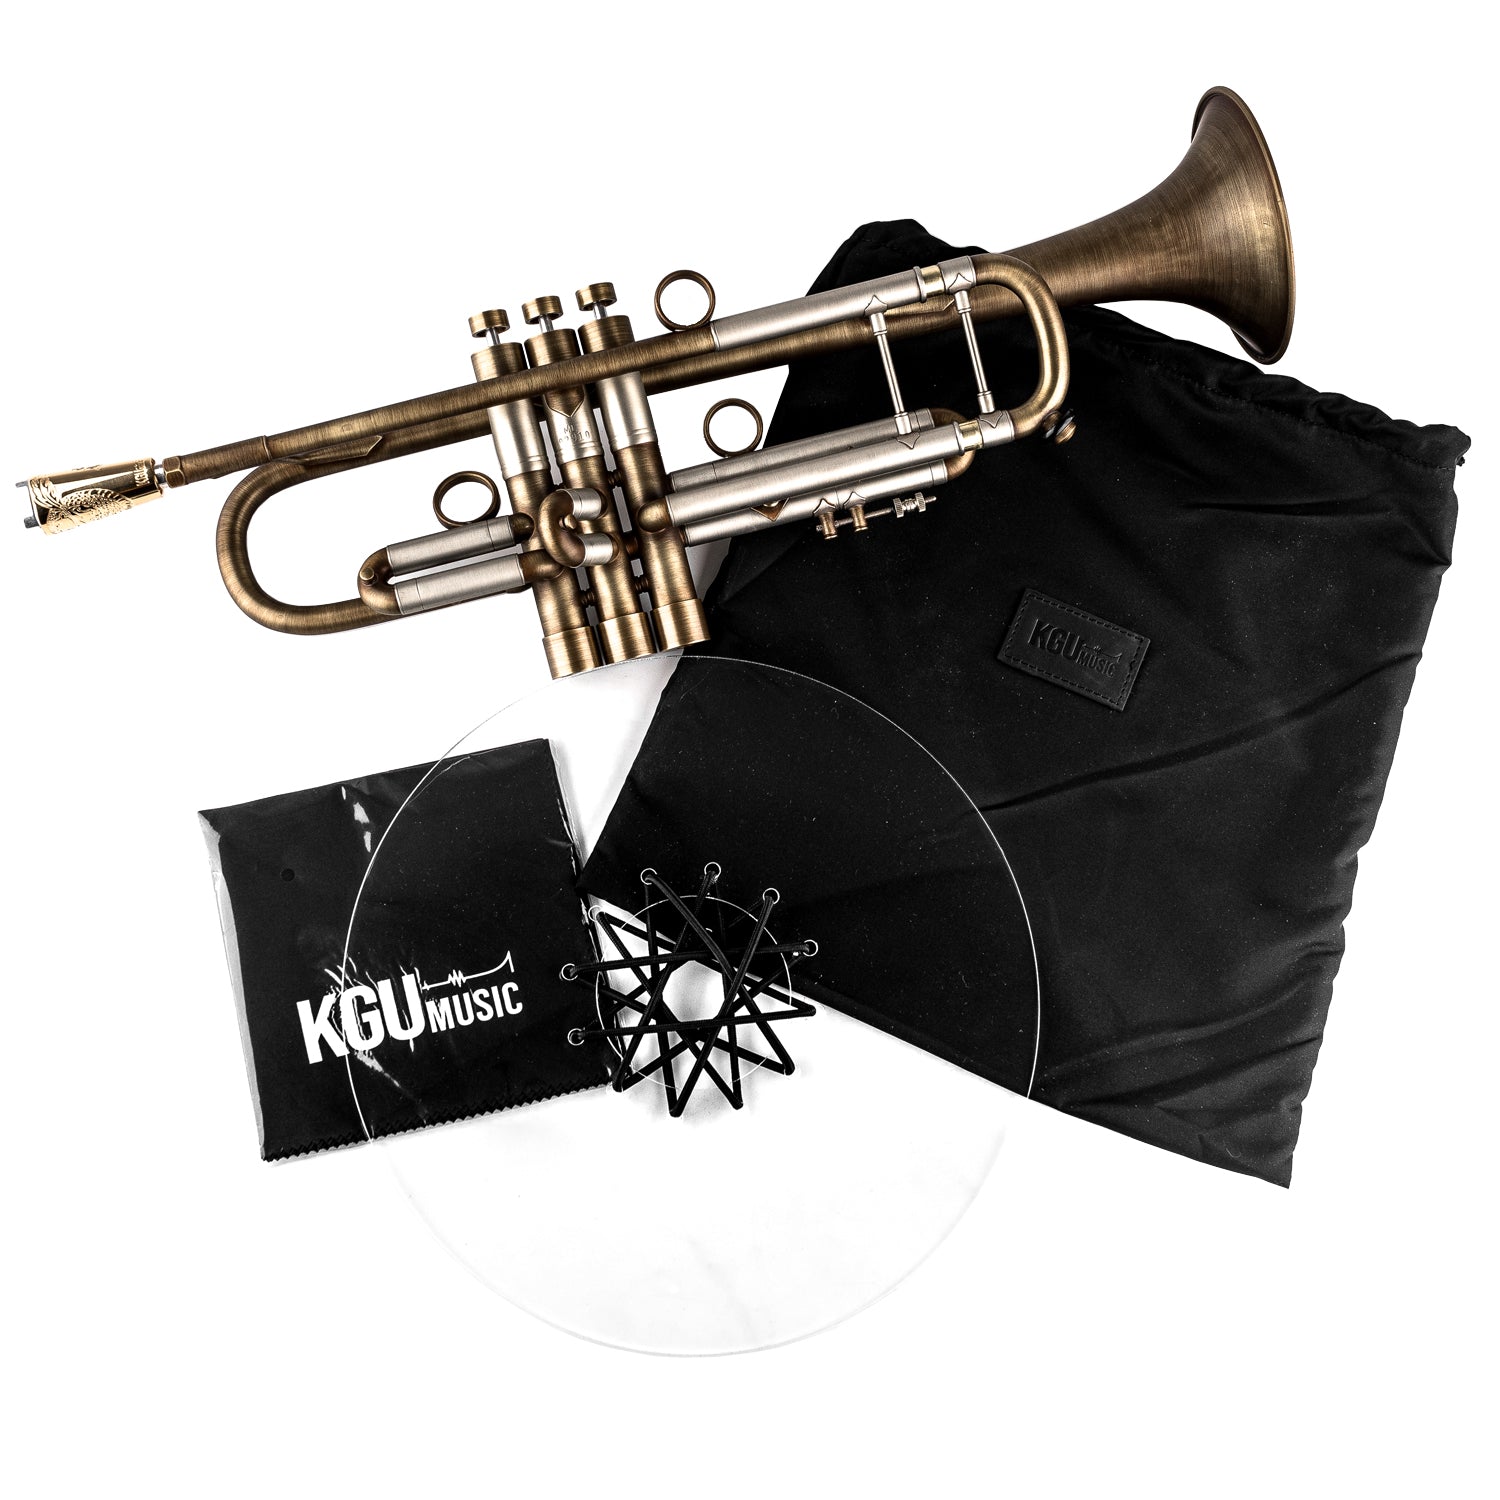 Deflector for Trumpet, Trombone, Saxophone | Sound Mirror | KGUmusic